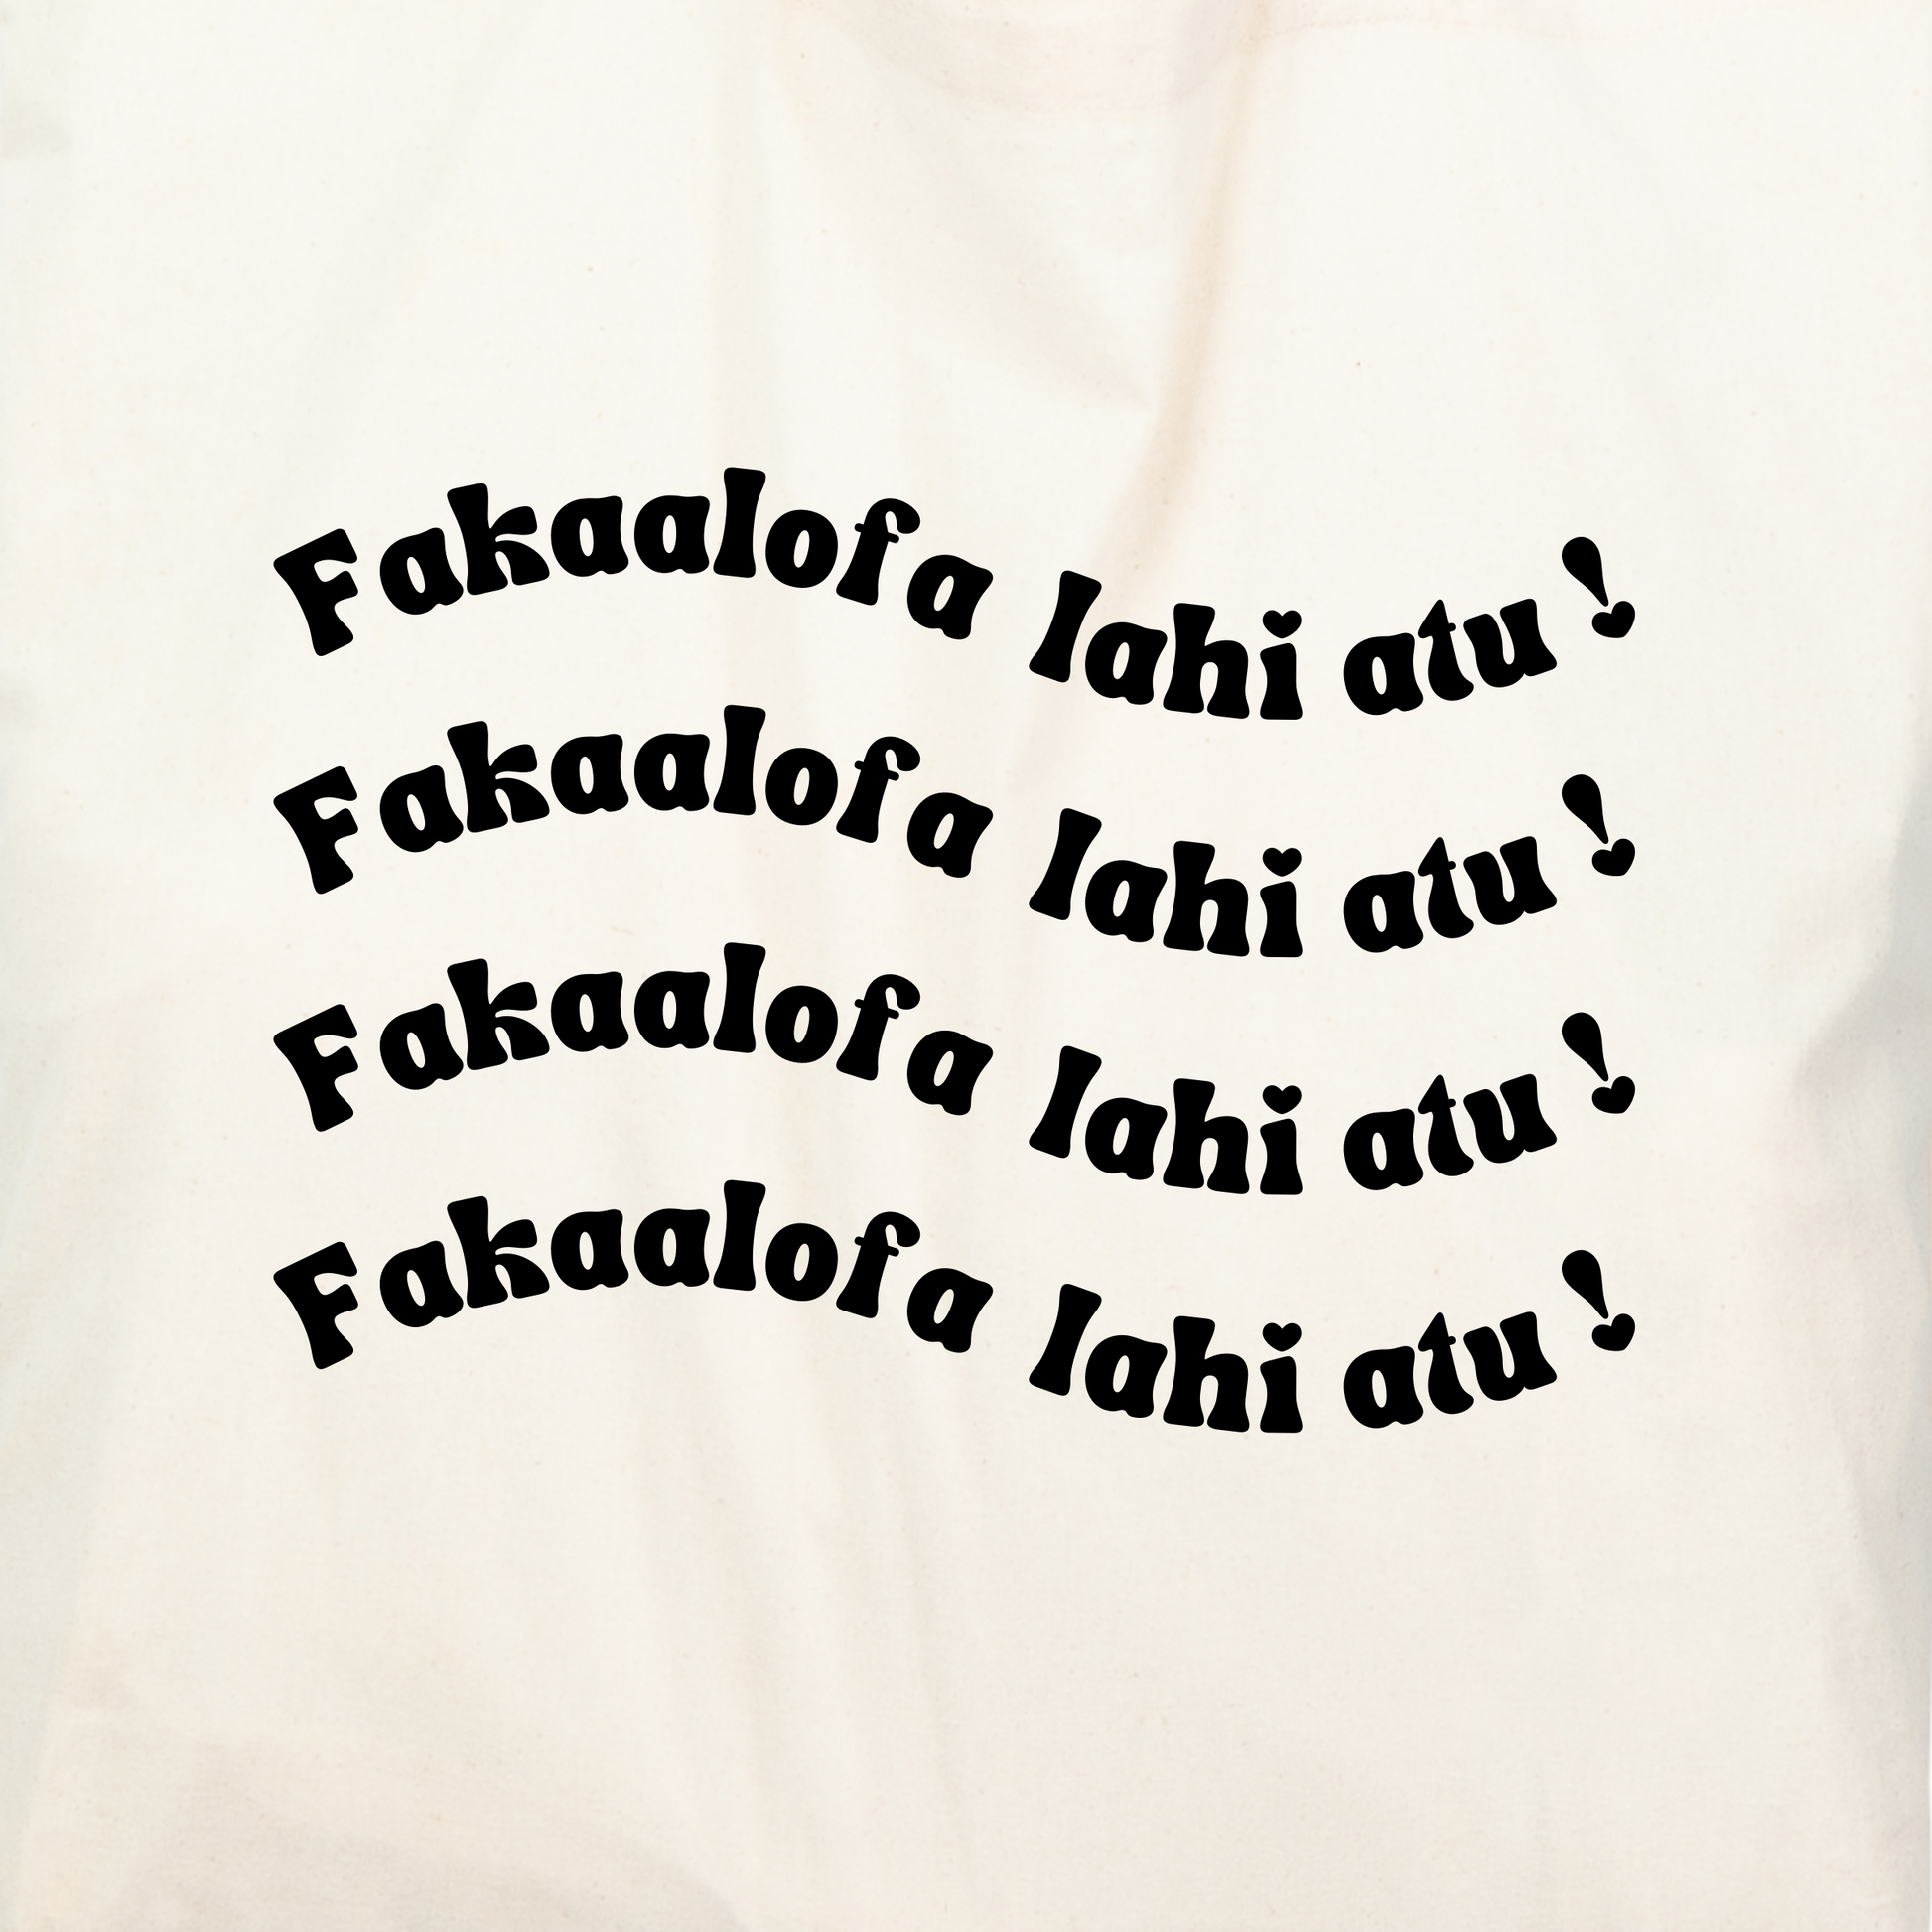 100% Cotton Tote Bag with Vinyl Designs - Fakaalofa lahi atu. 38 cm x 42 cm Cotton Tote Bag.  Machine Washable.